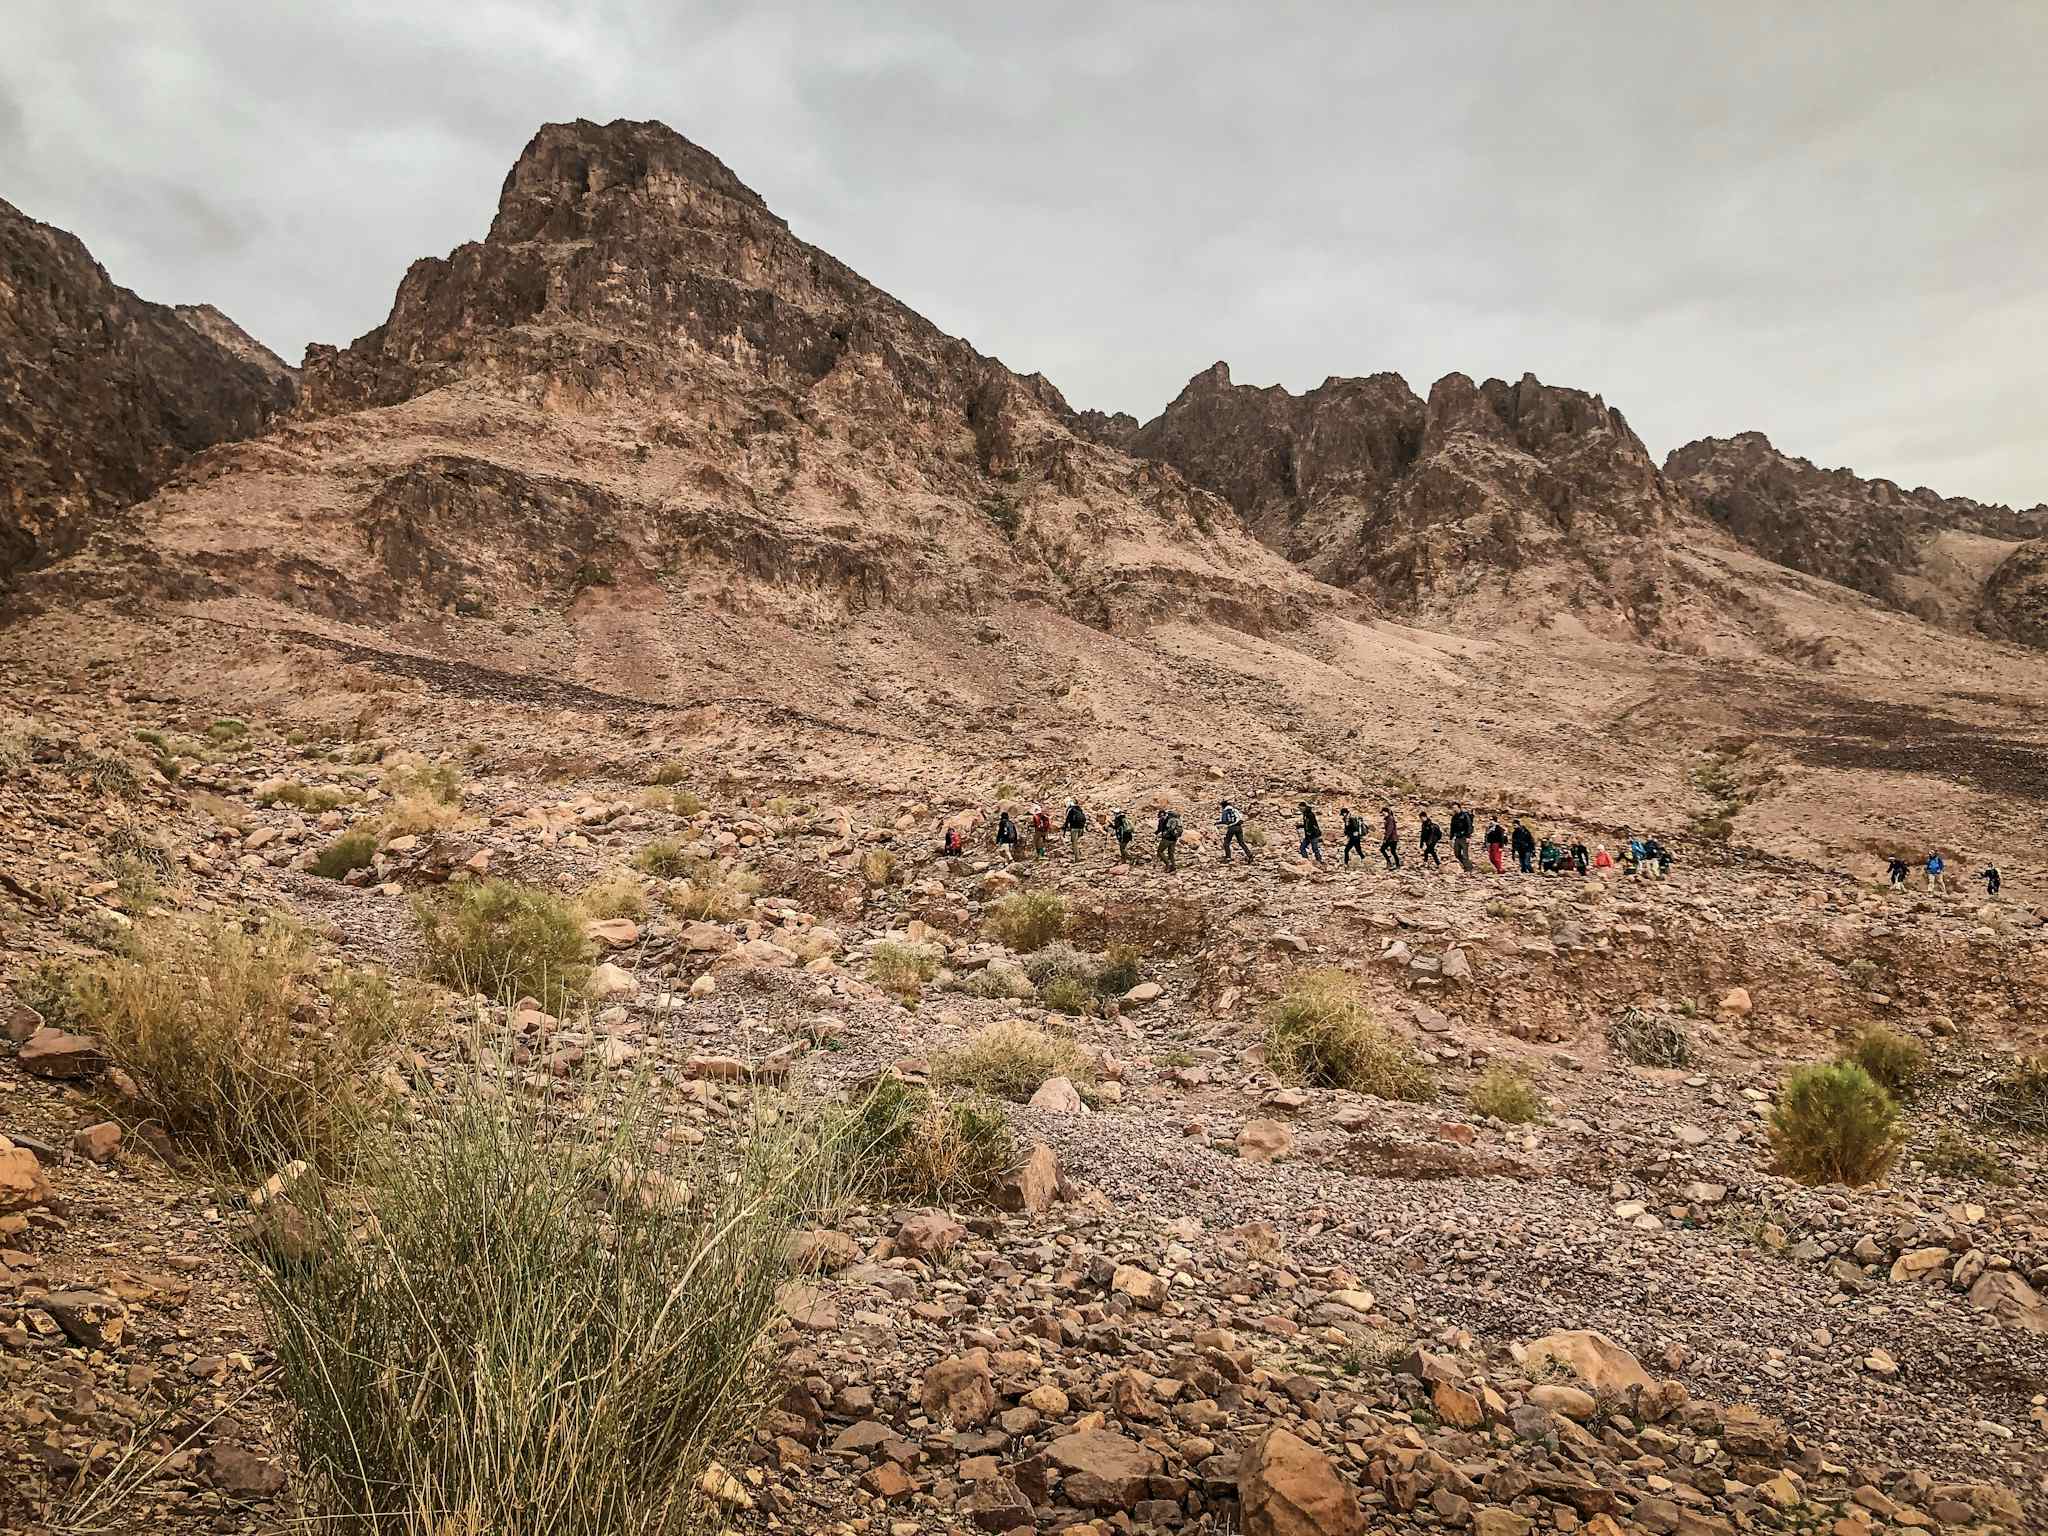 Hiking group on The Jordan Trail
Host image - Experience Jordan / The Jordan Trail